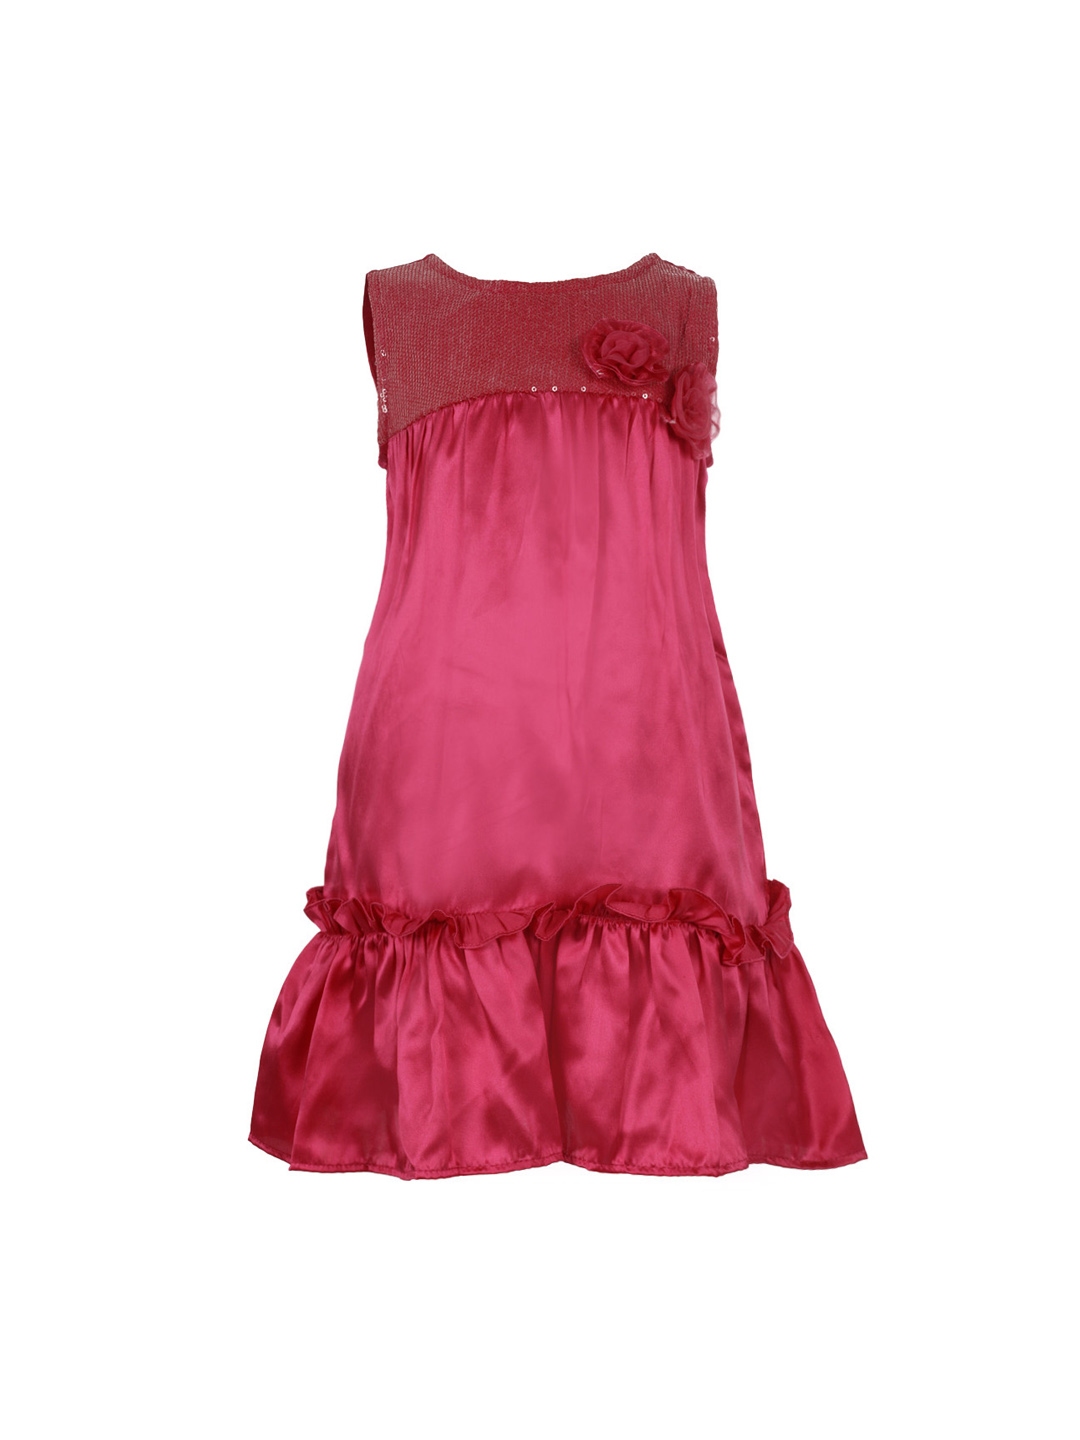 Buy Elle Kids Girls Rose Pink Party Dress - Dresses for Girls 124893 ...